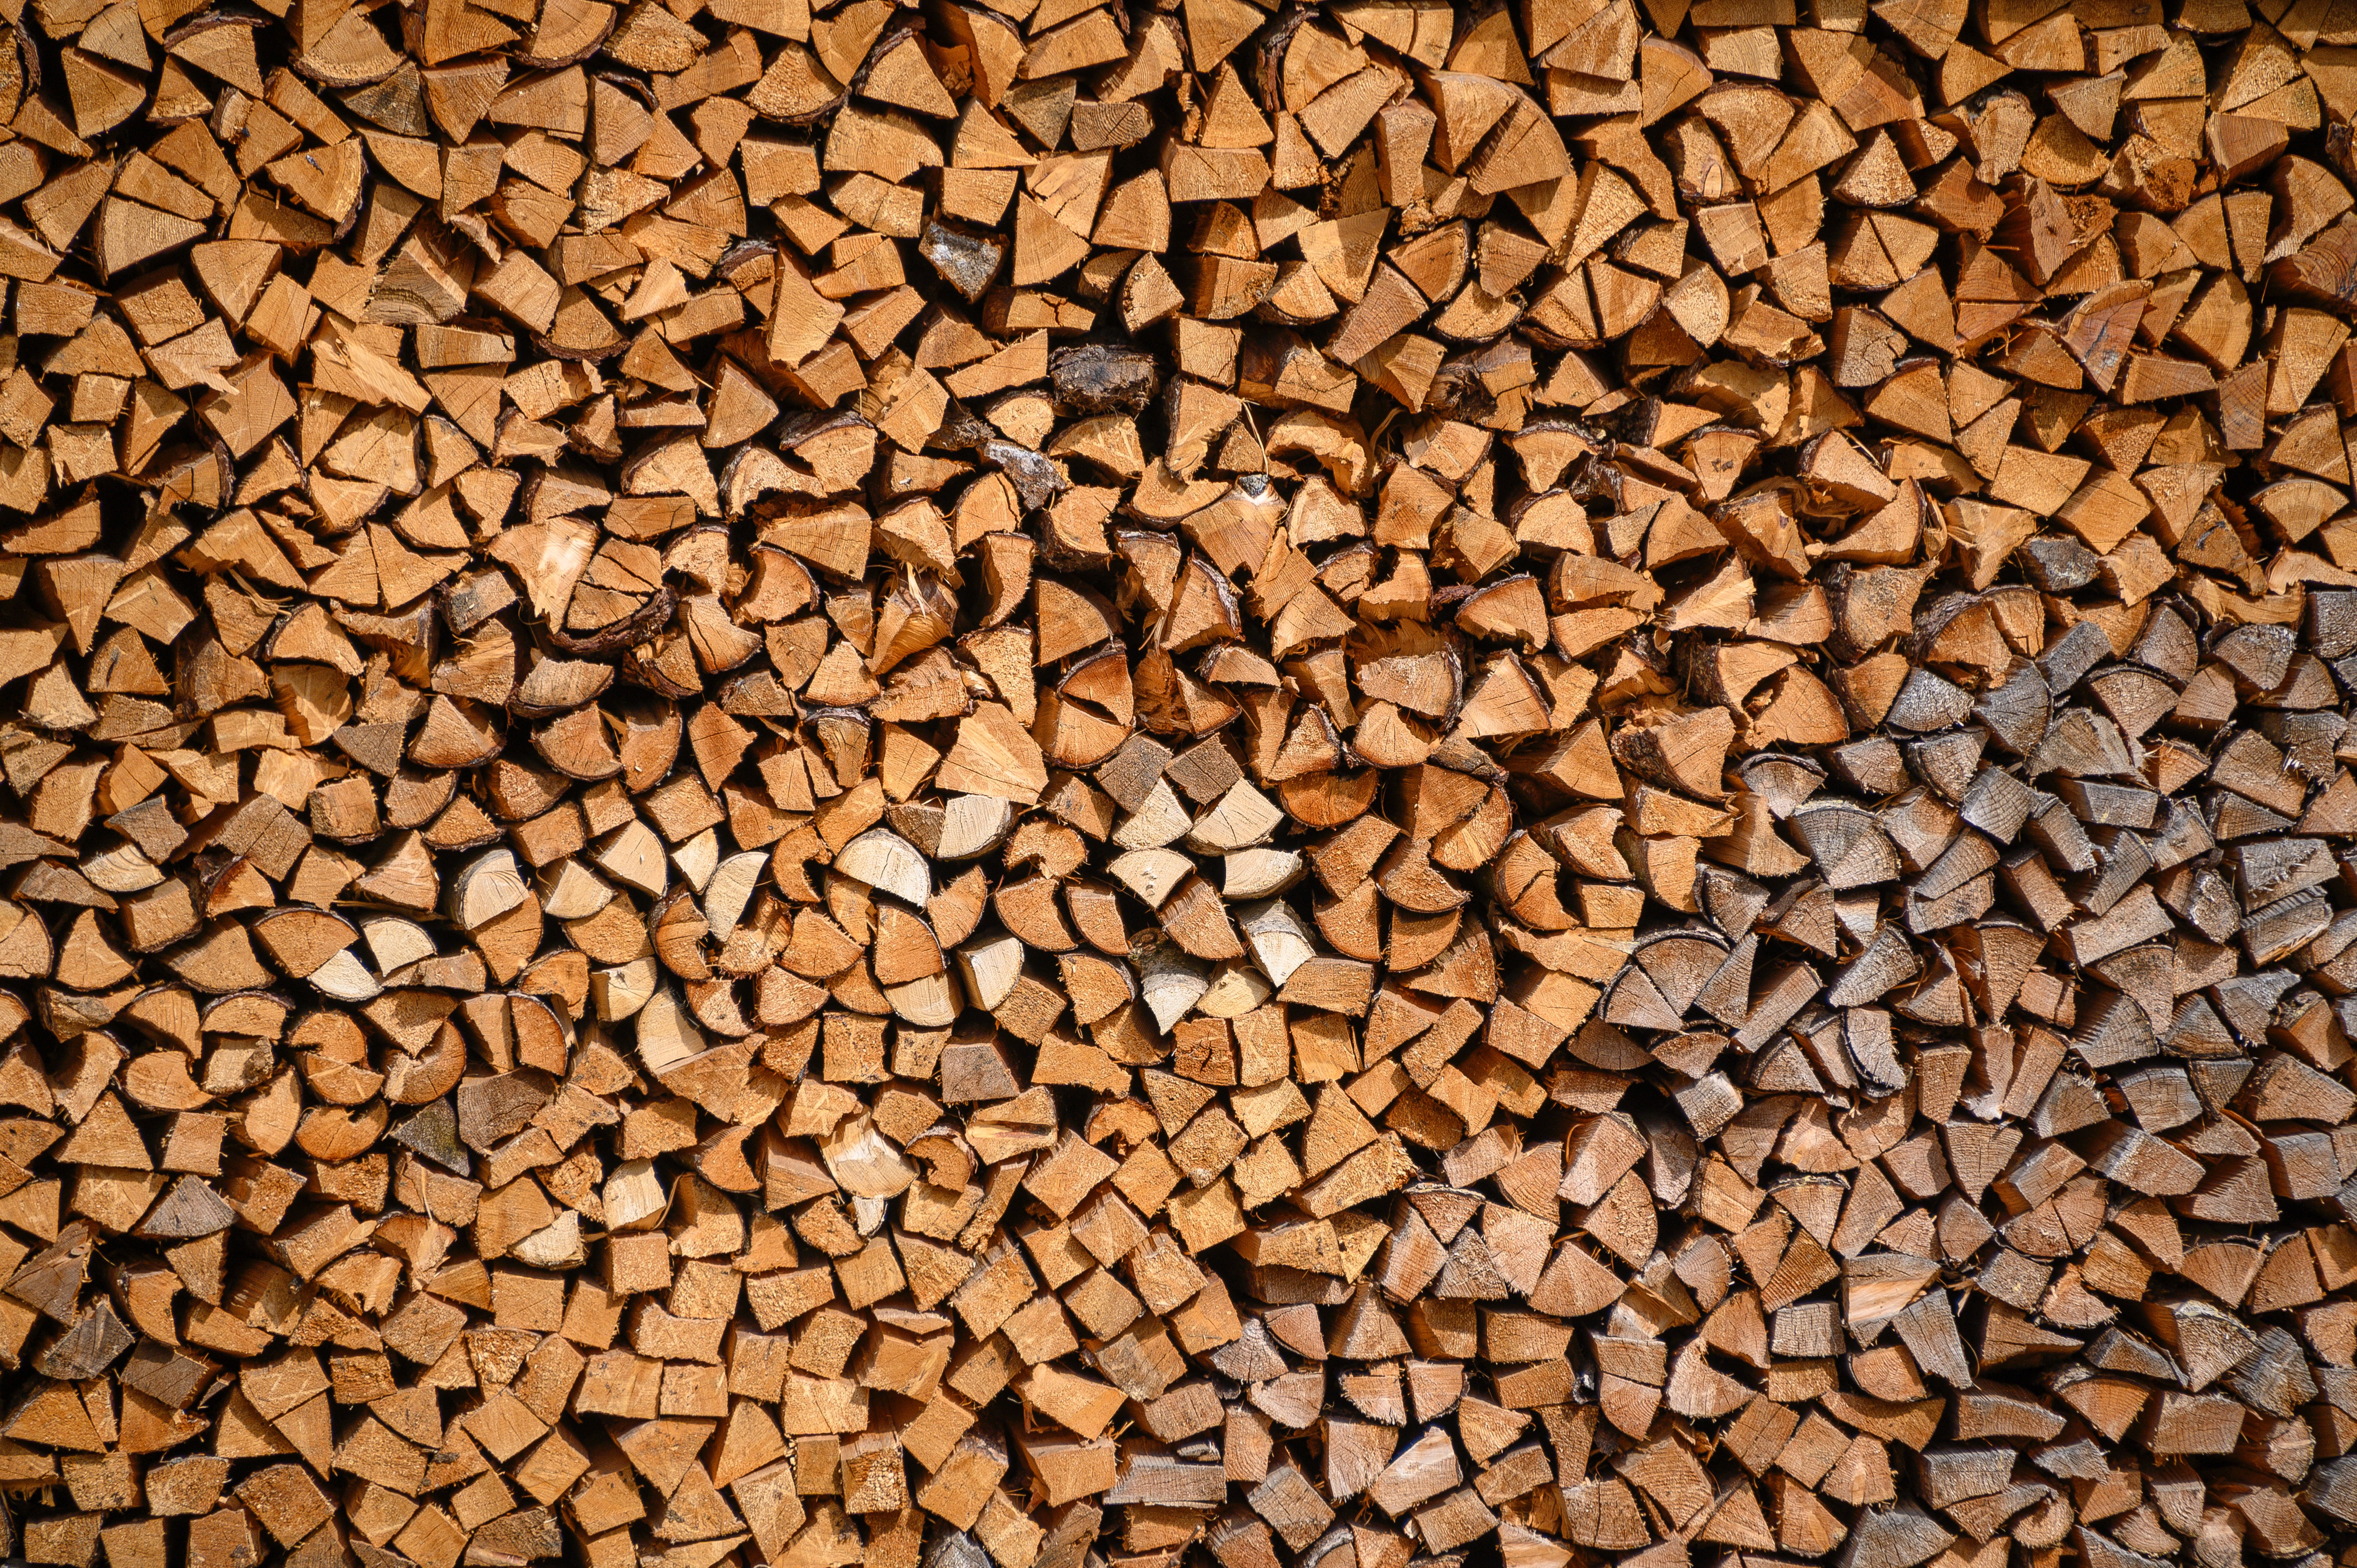 Production of wood for energy in Lääne-Viru county